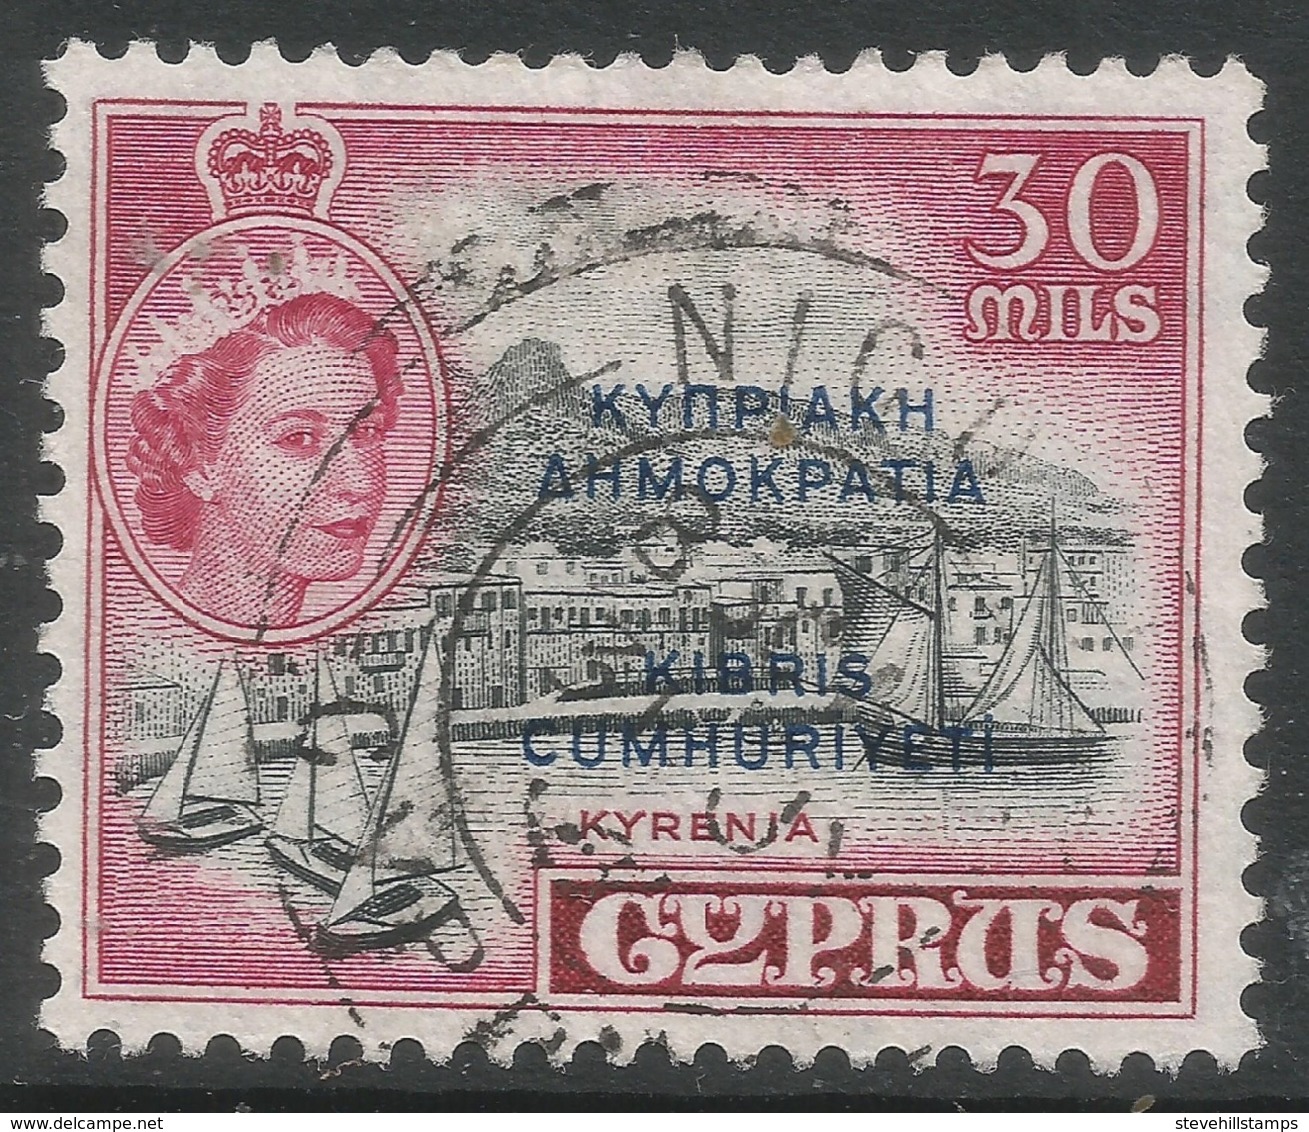 Cyprus. 1960-61 Republic Overprint. 30m Used. SG 195 - Ongebruikt